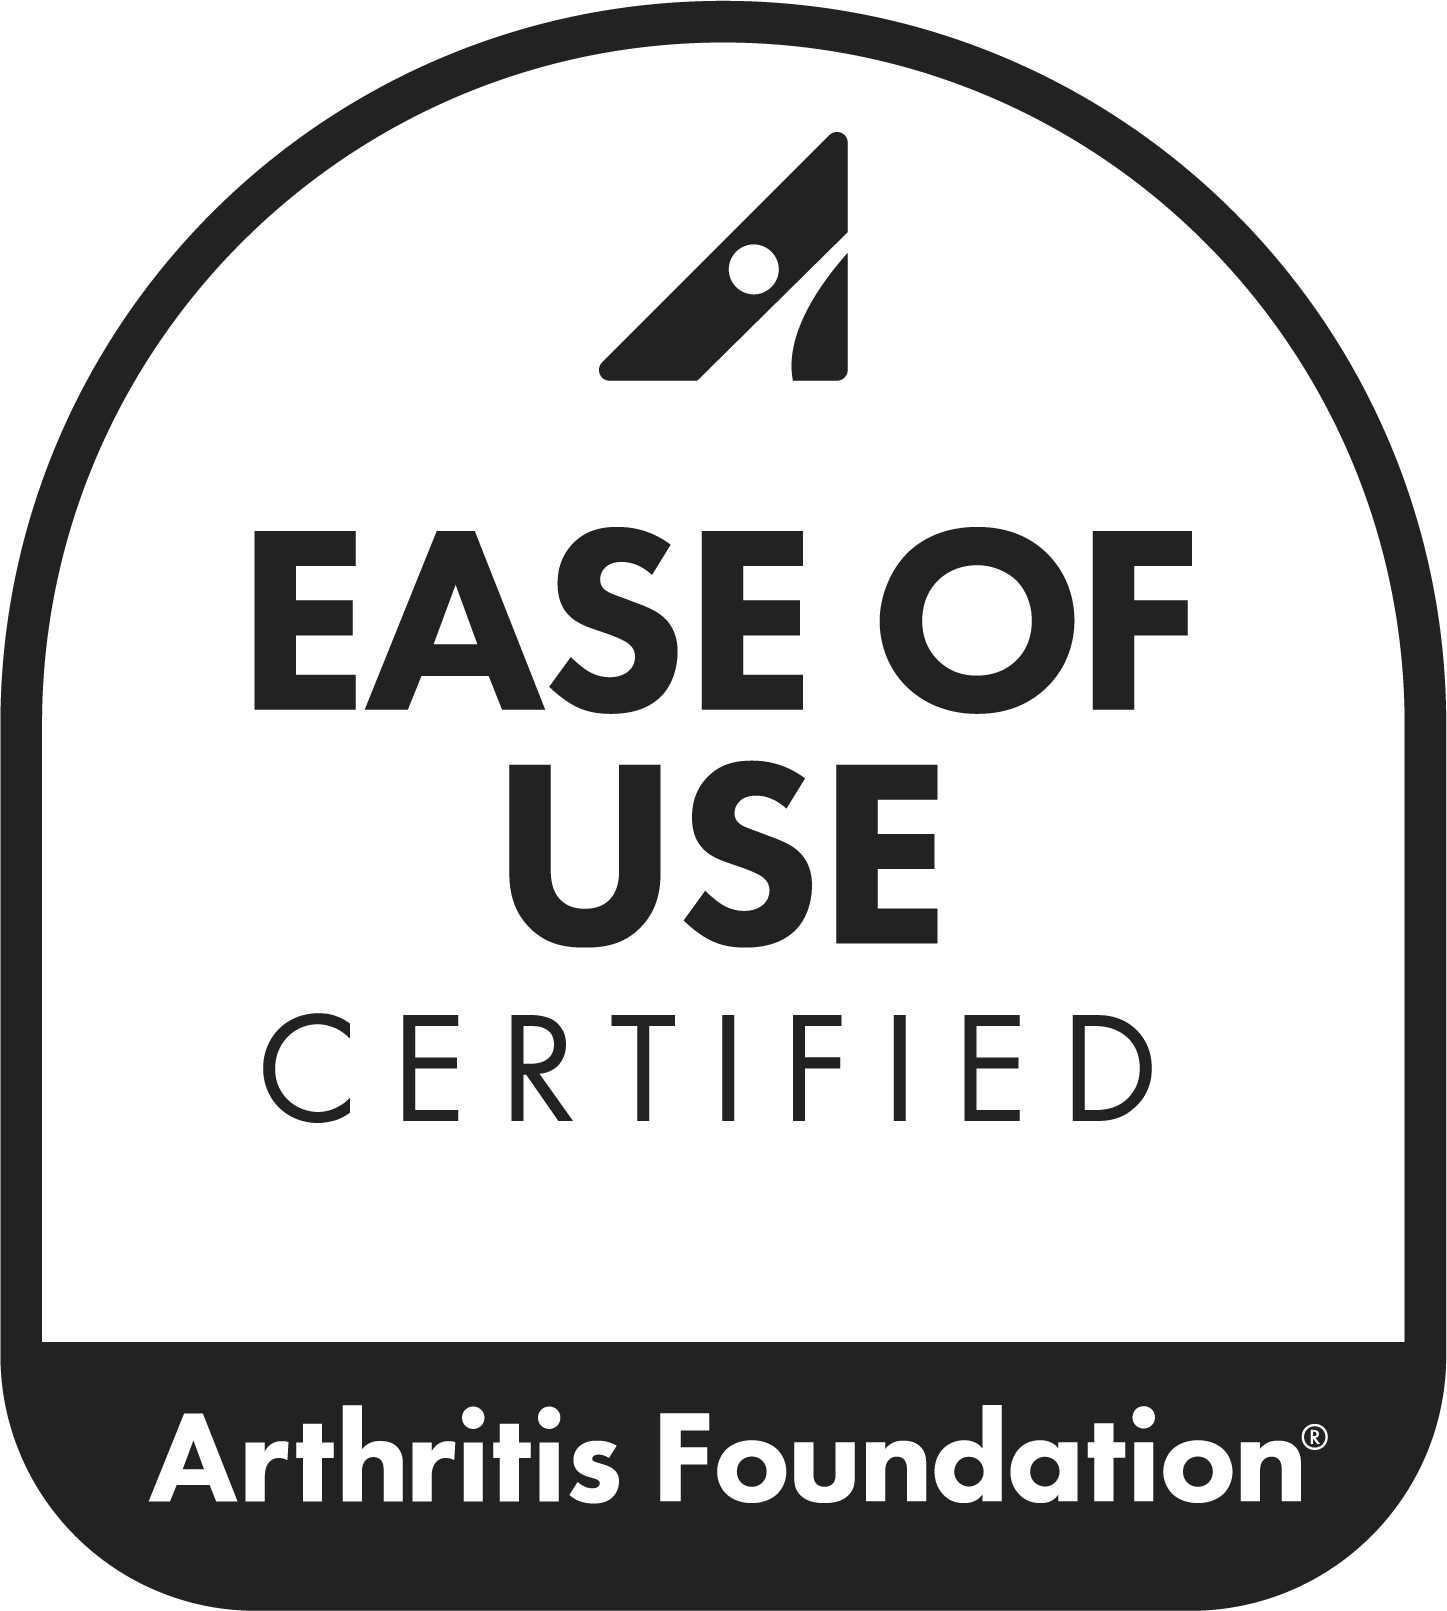 Arthritis Foundation Ease of Use Commendation